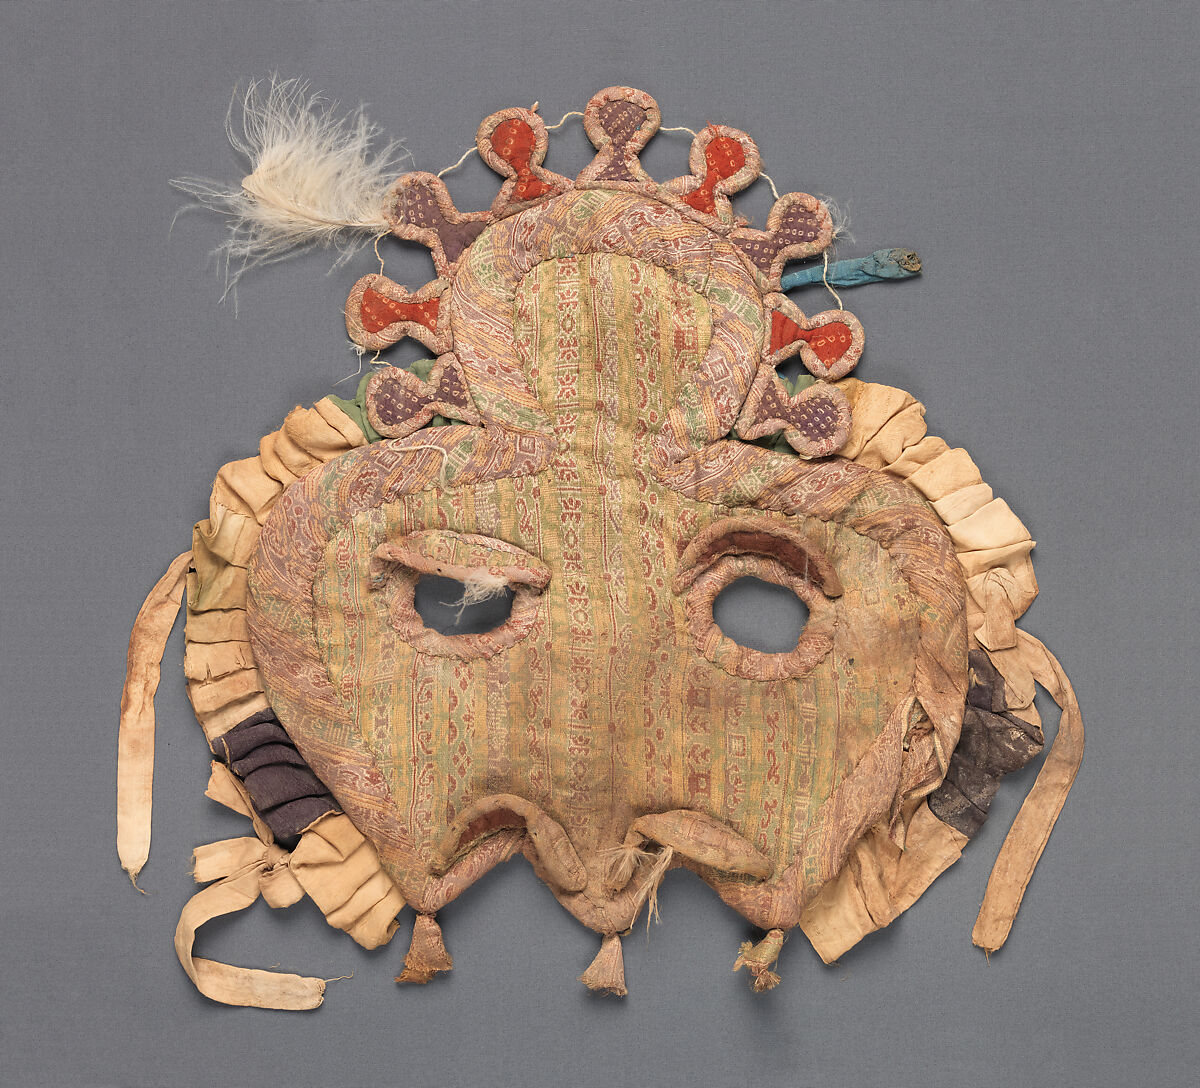 Shaffron (Horse's Head Defense), Textile (silk), animal fiber, feathers, Central Asian 